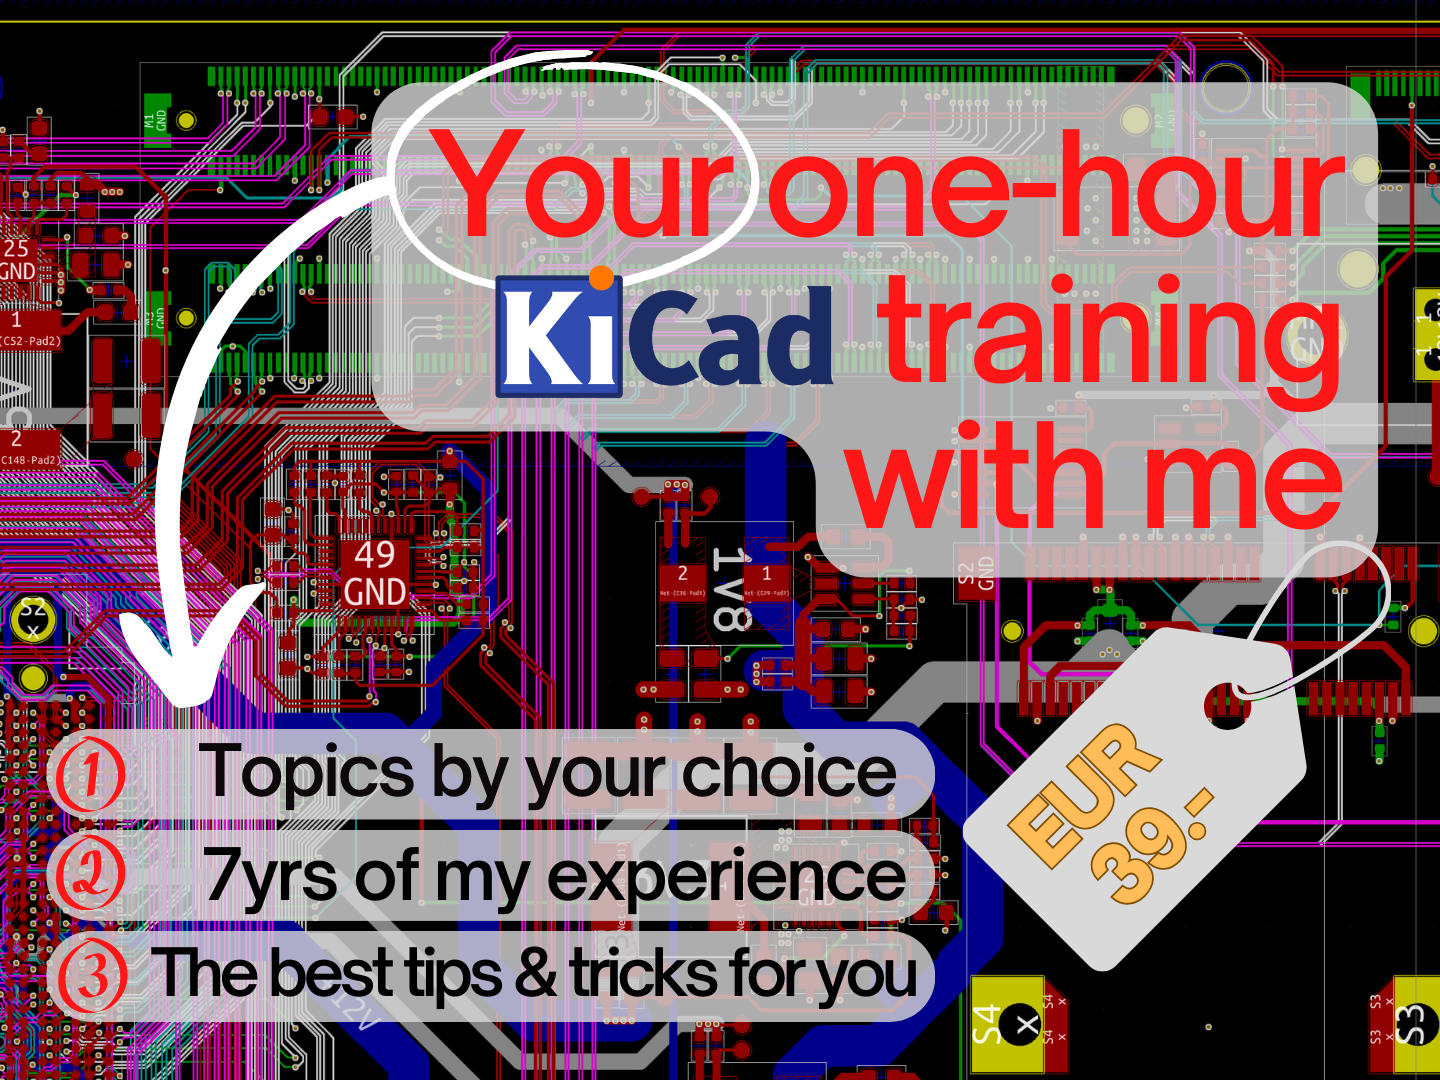 KiCAD 1:1 one-hour training